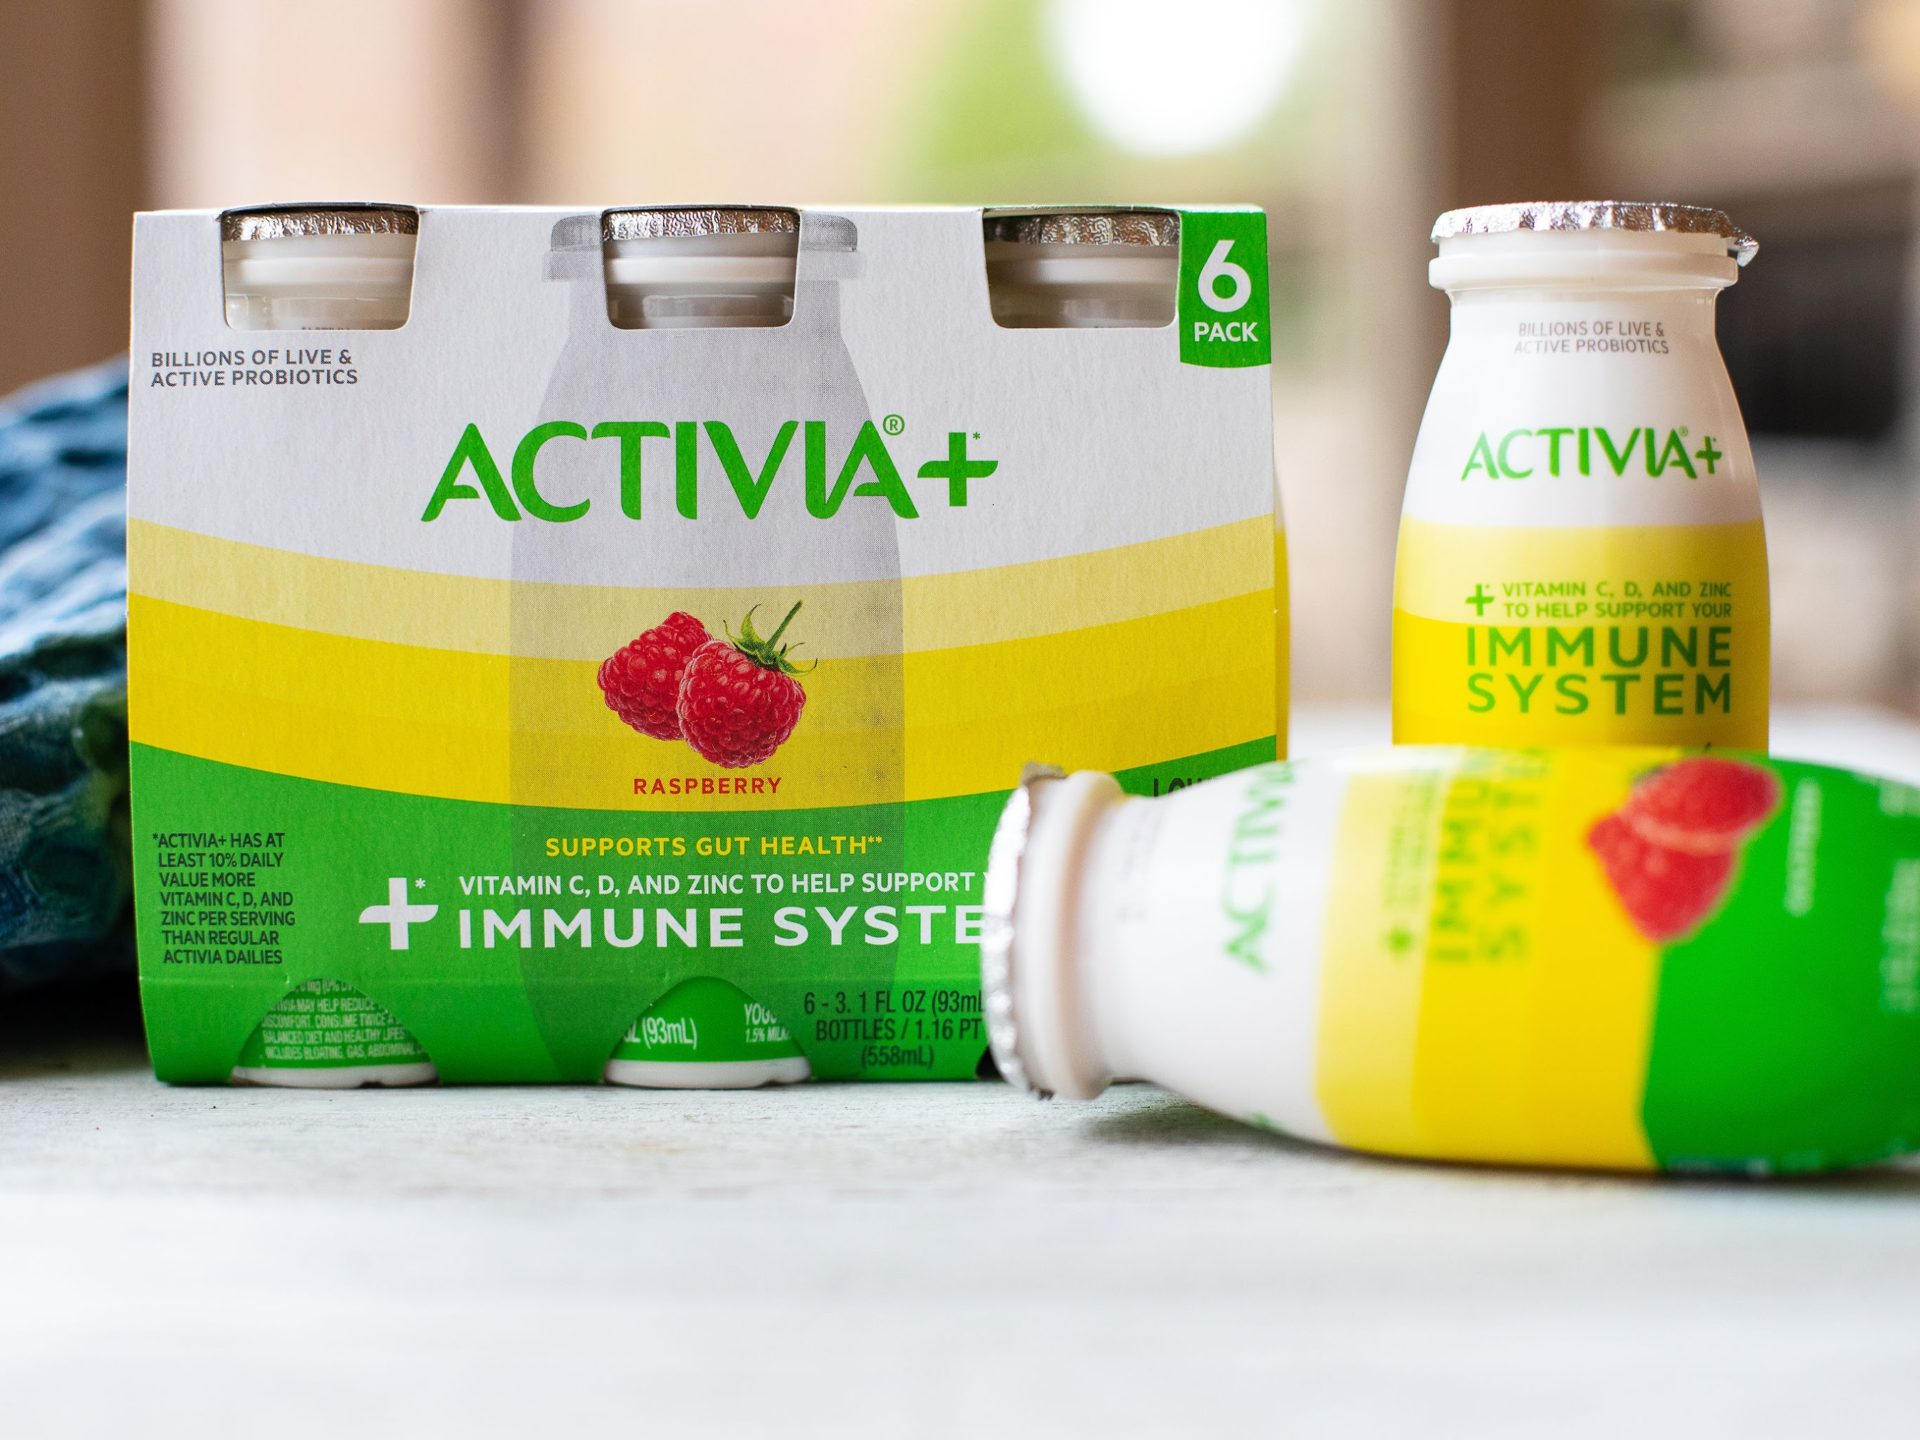 Activia+ Probiotic Yogurt Drink 6-Pack Just $1.79 At Kroger